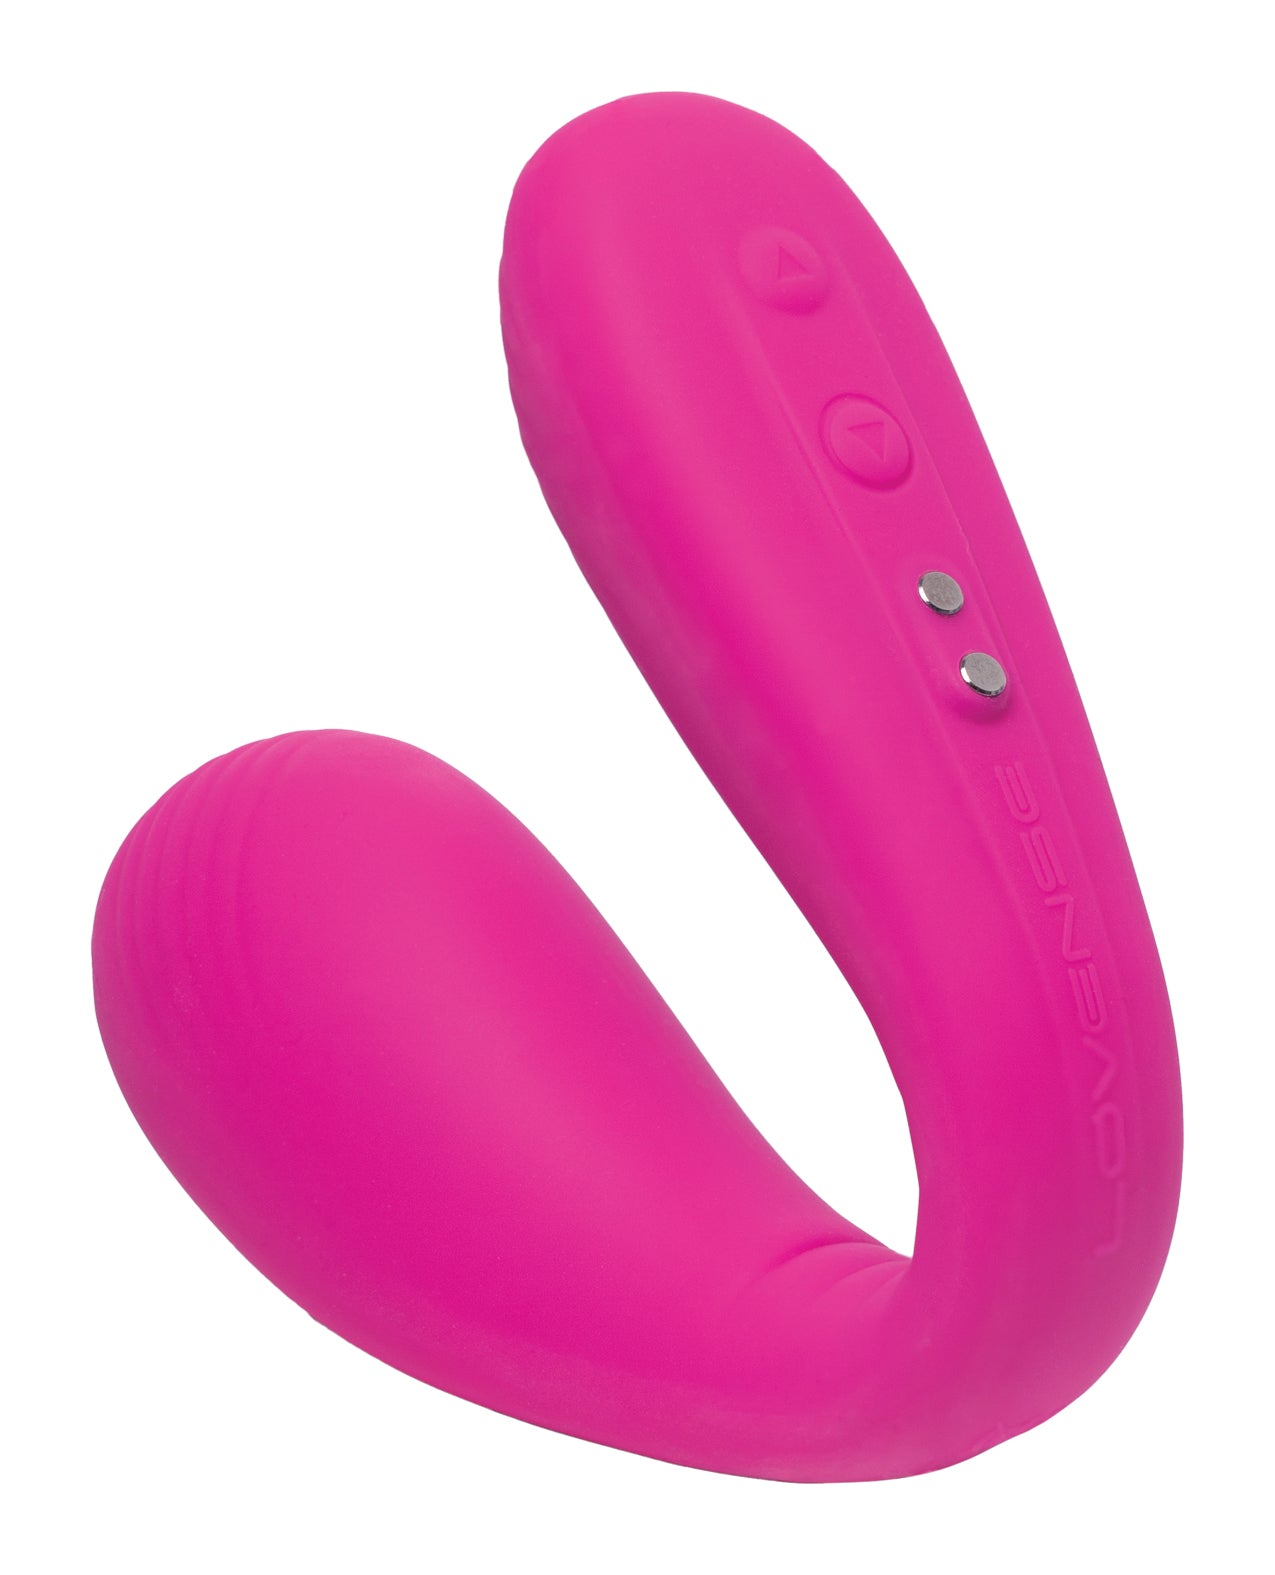 Lovense Dolce (previously Quake) Adjustable Dual Stimulator - Pink